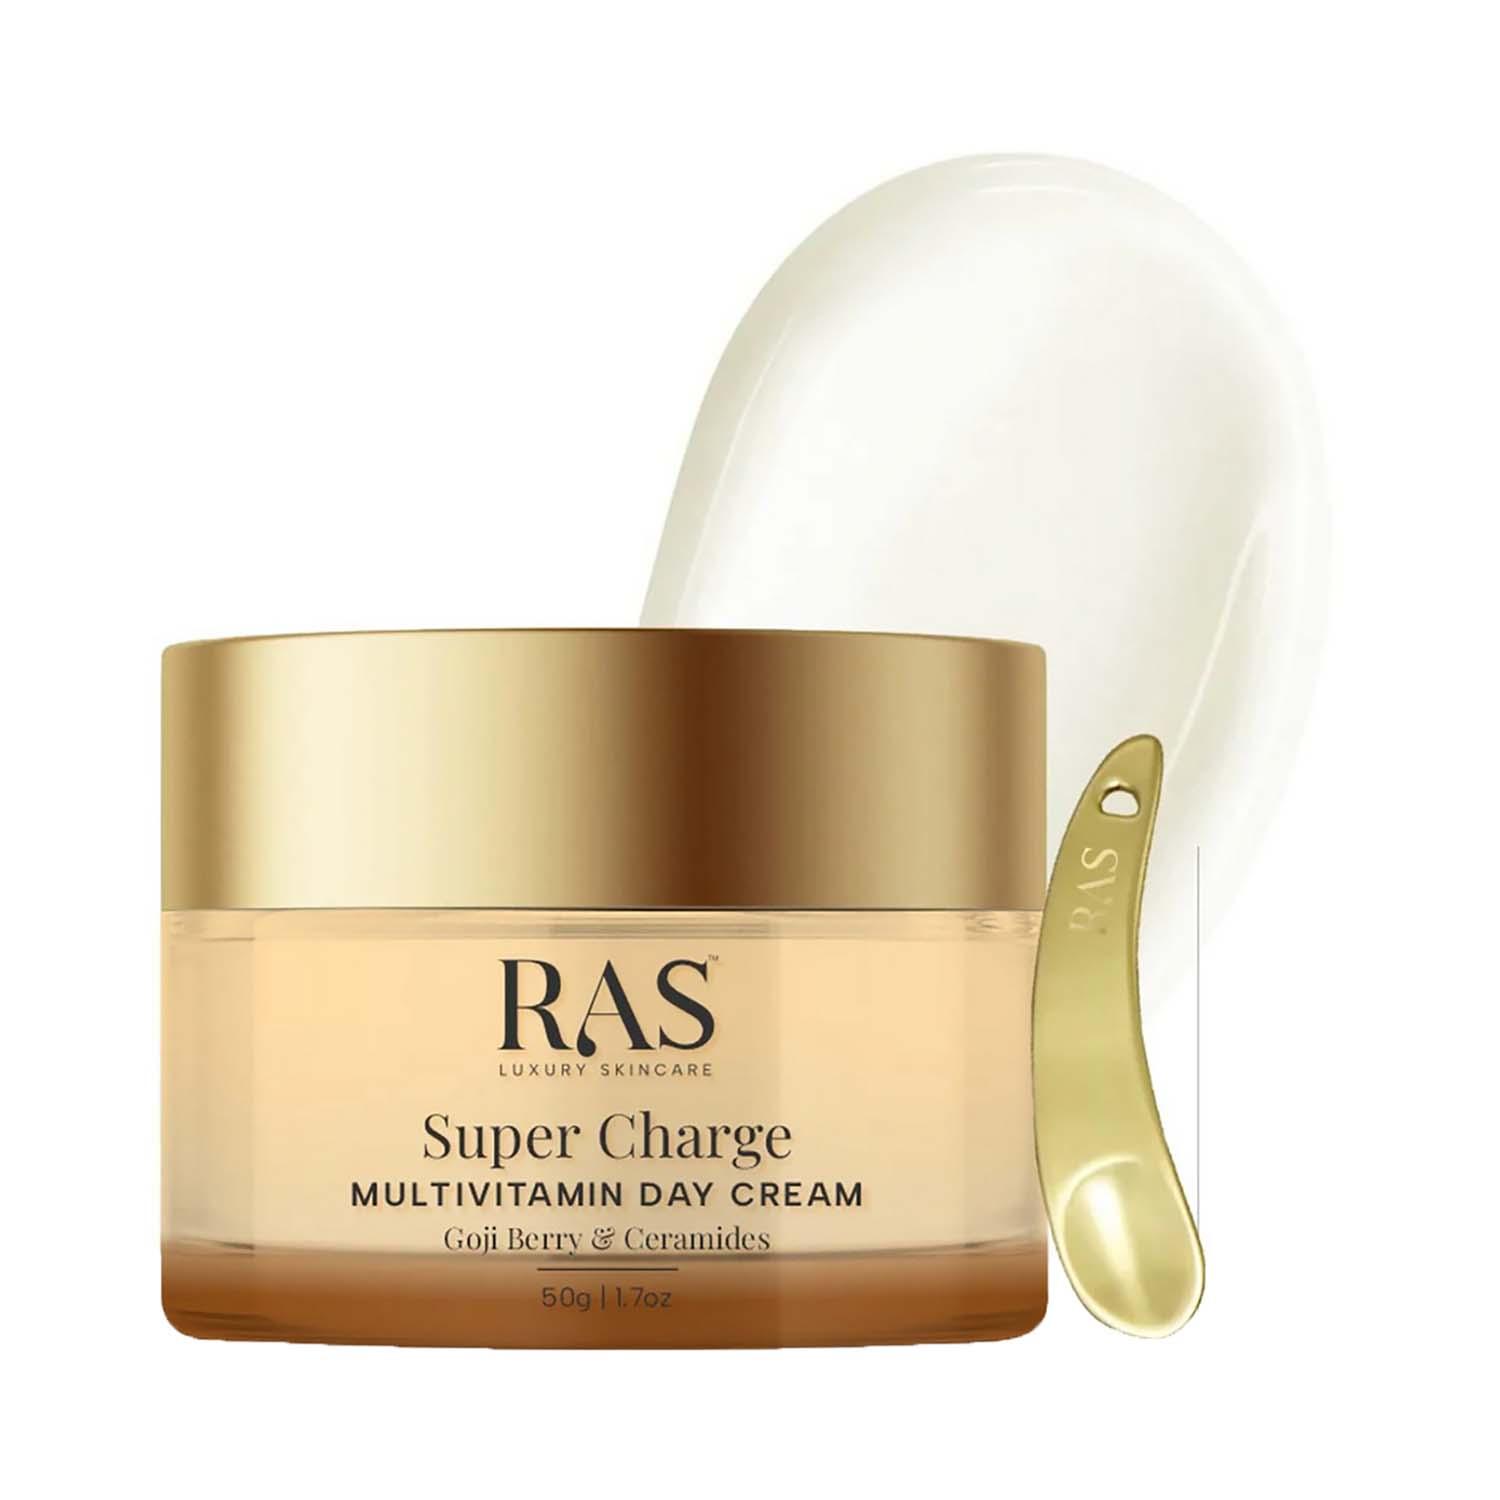 Ras Luxury Skincare | Ras Luxury Skincare Super Charge Multivitamin Day Cream With SPF 30 PA++++ (50 g)